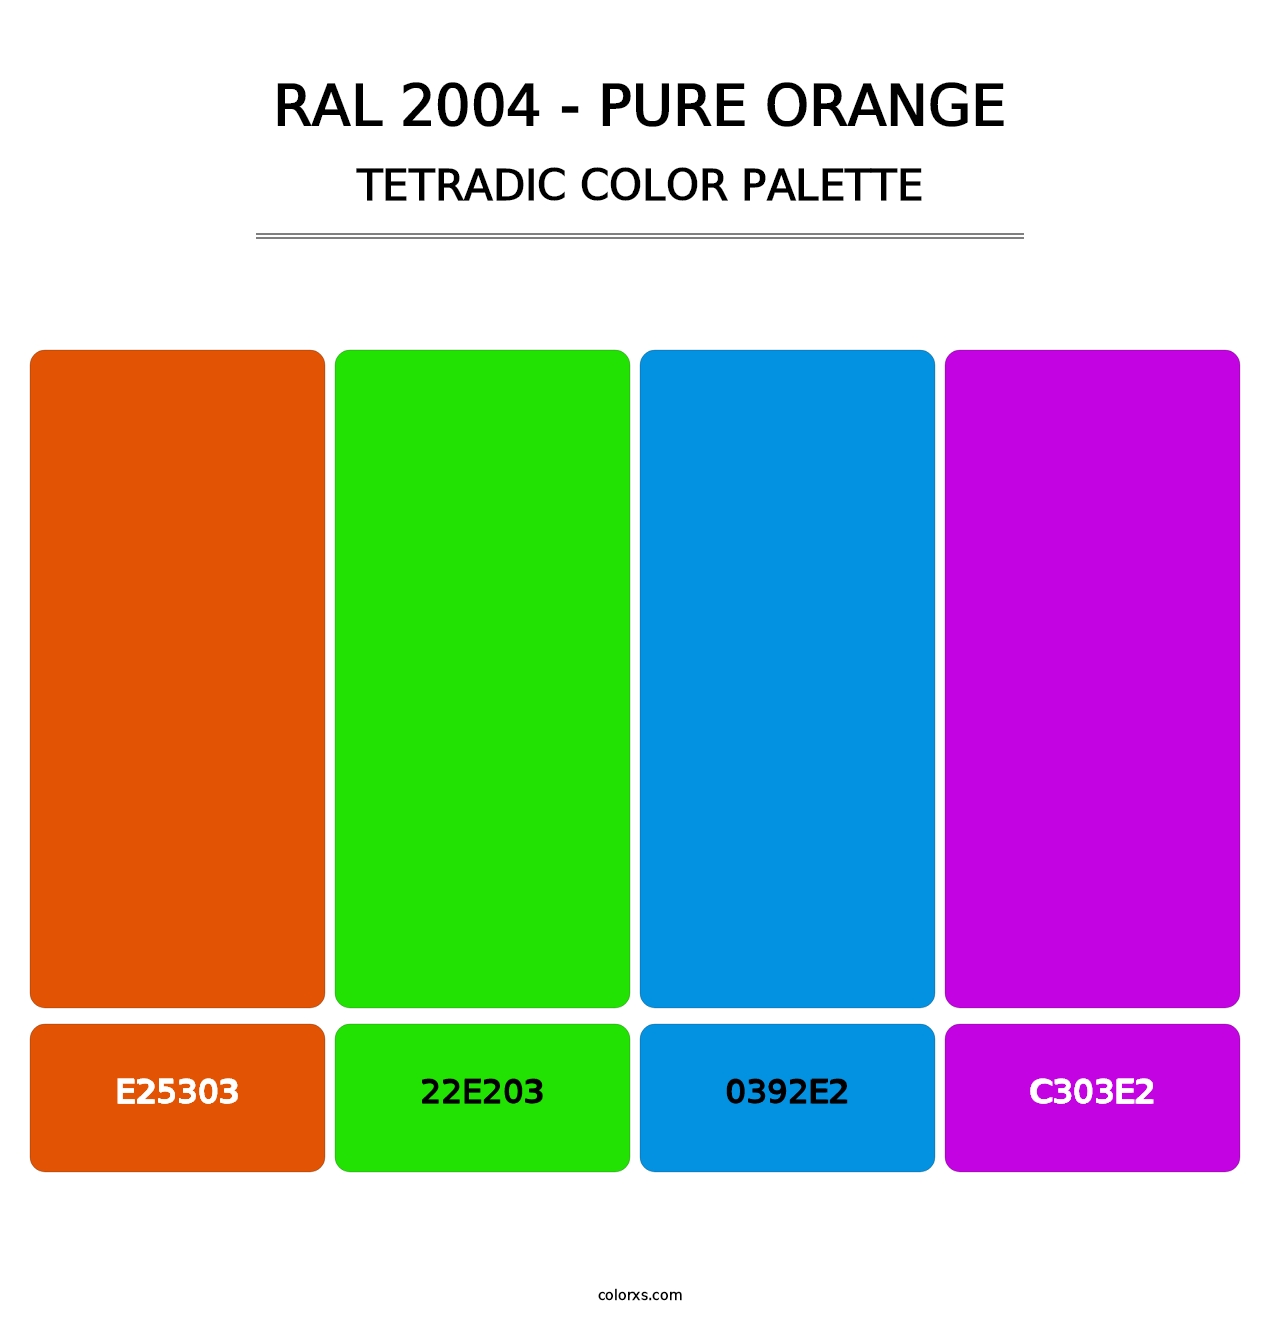 RAL 2004 - Pure Orange - Tetradic Color Palette